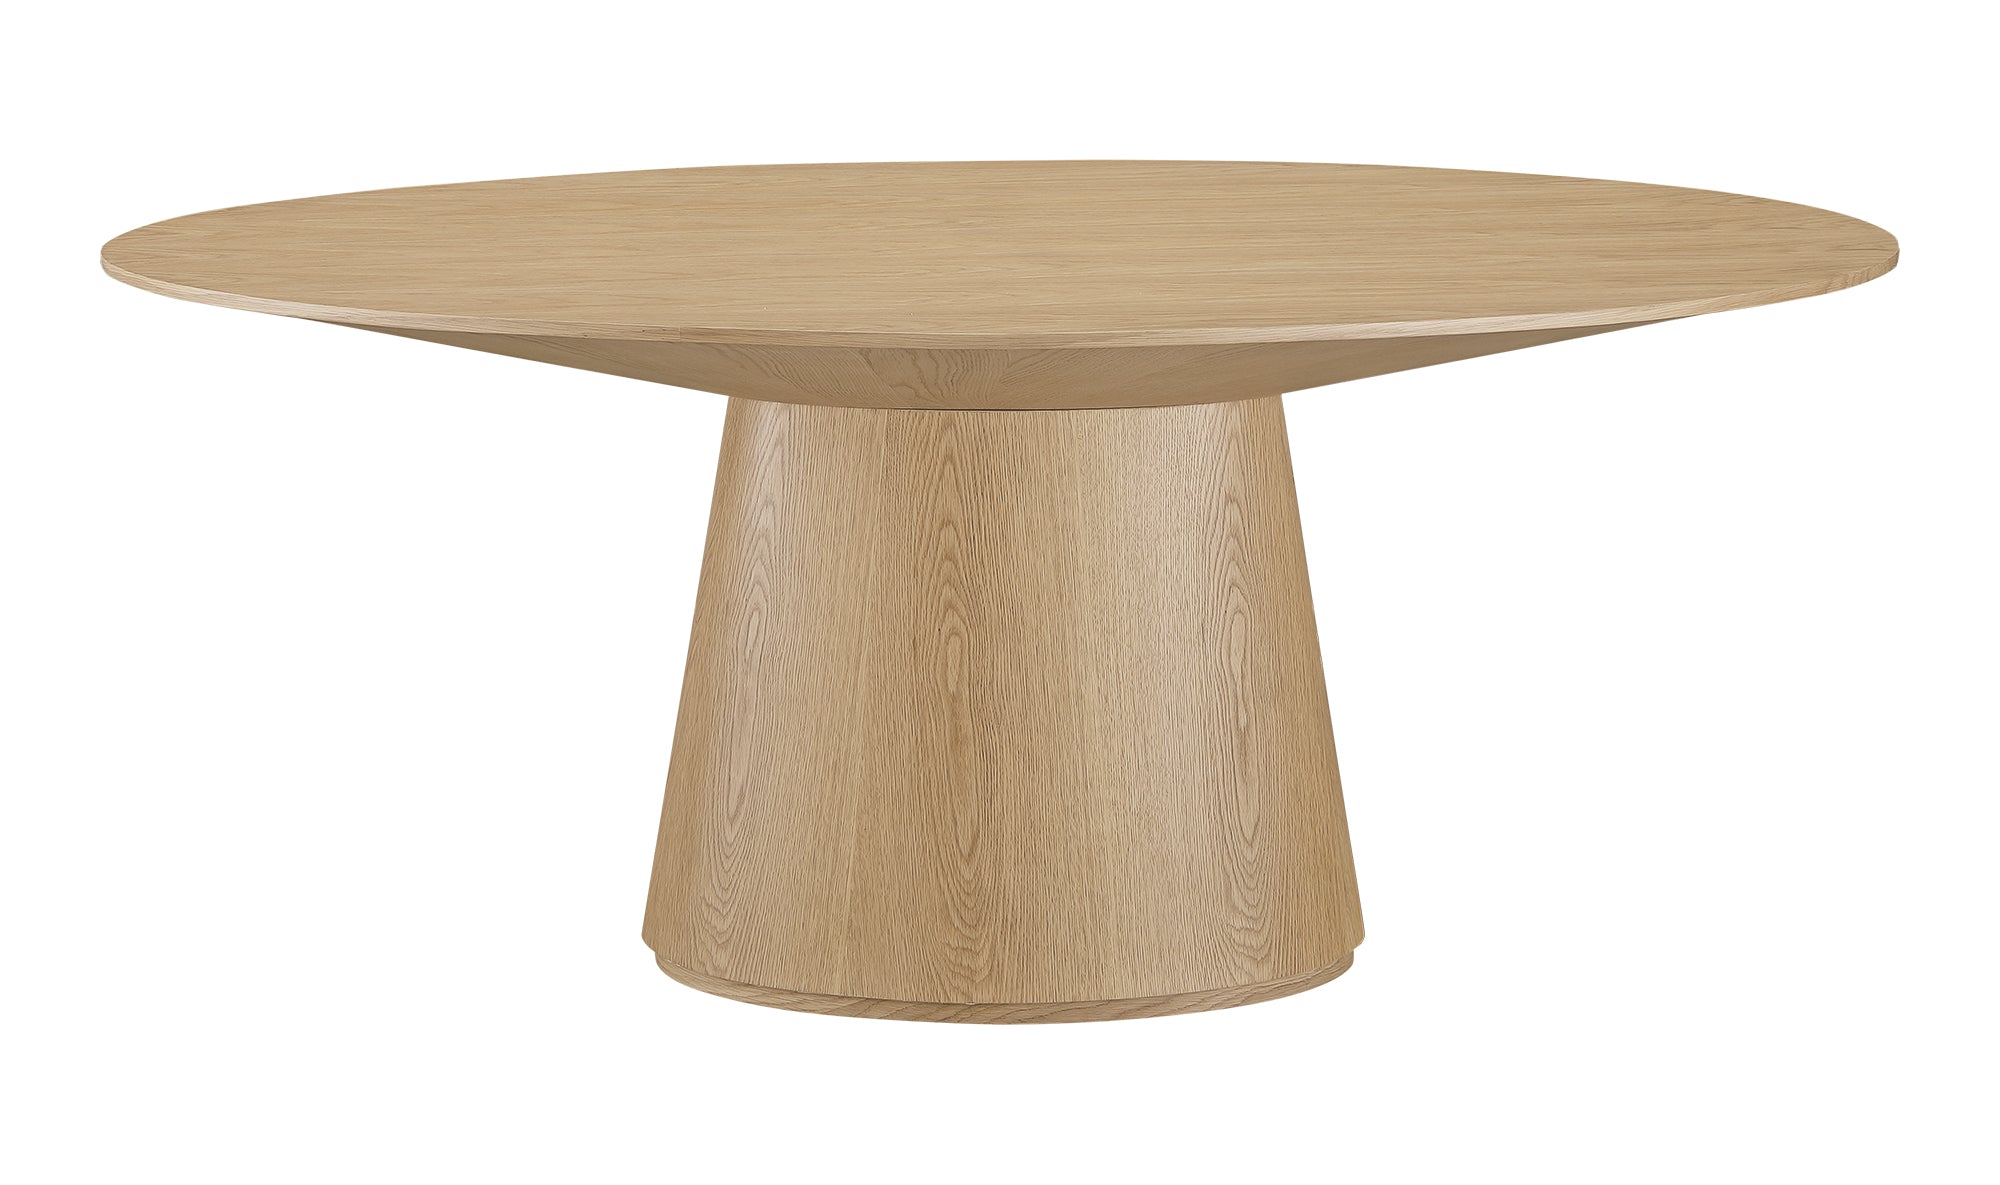 OTAGO OVAL DINING TABLE - Hedi's Furniture